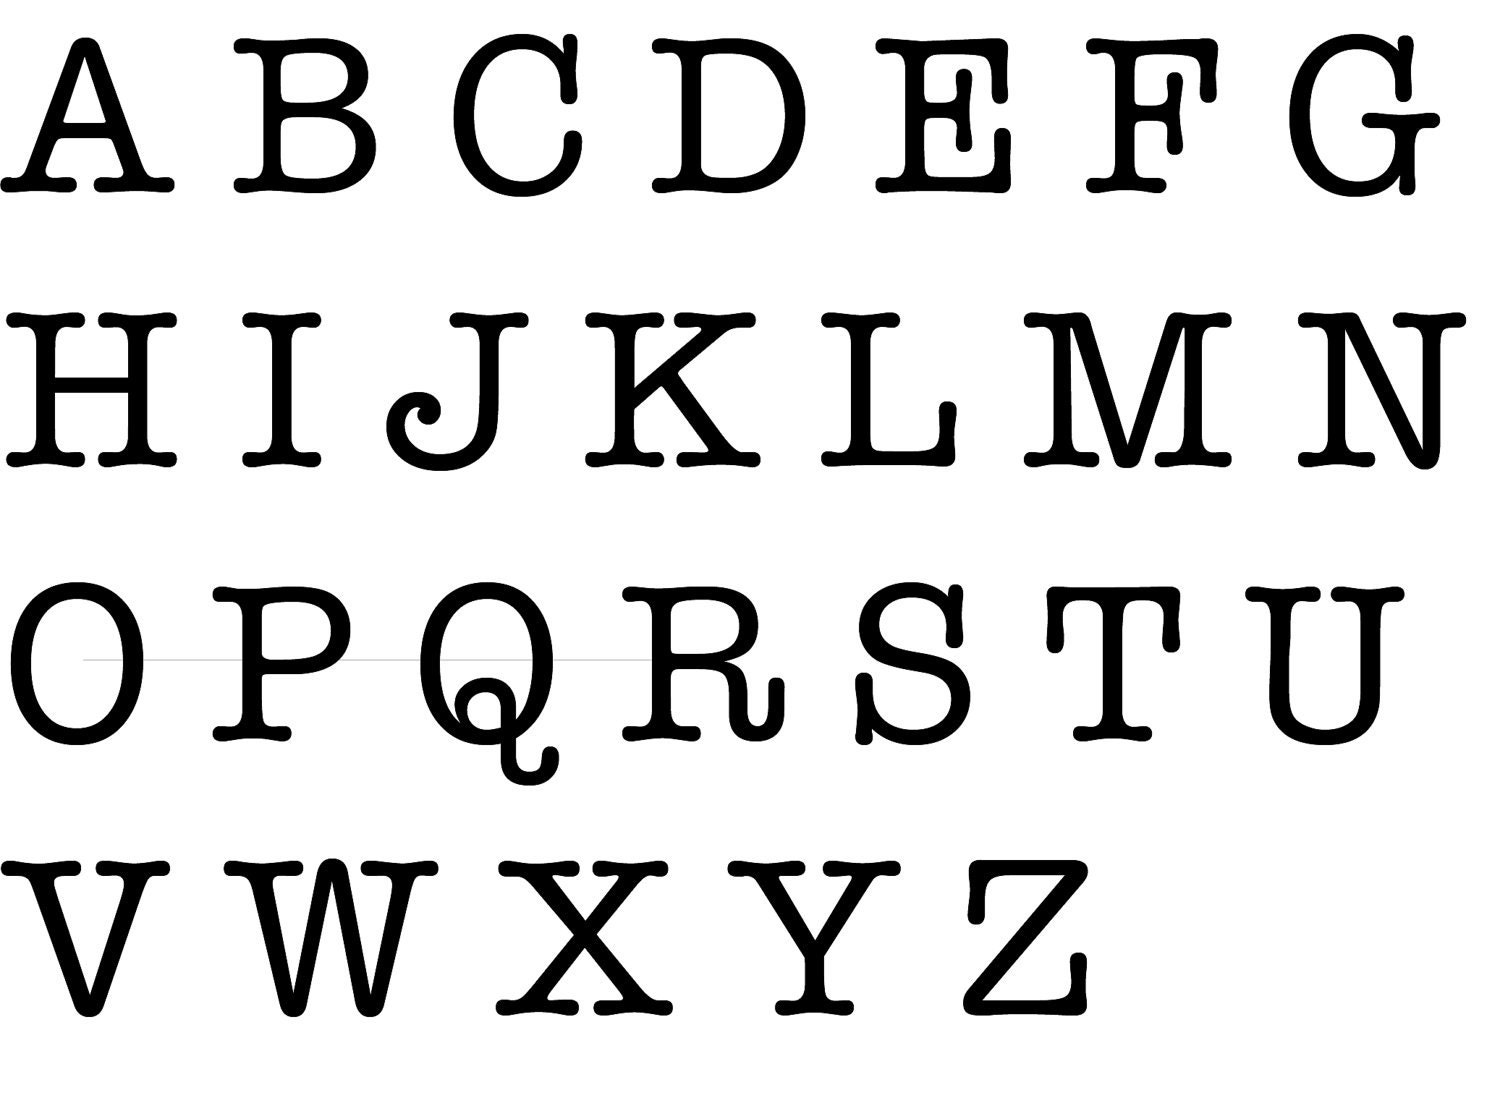 Typewriter Font Alphabet